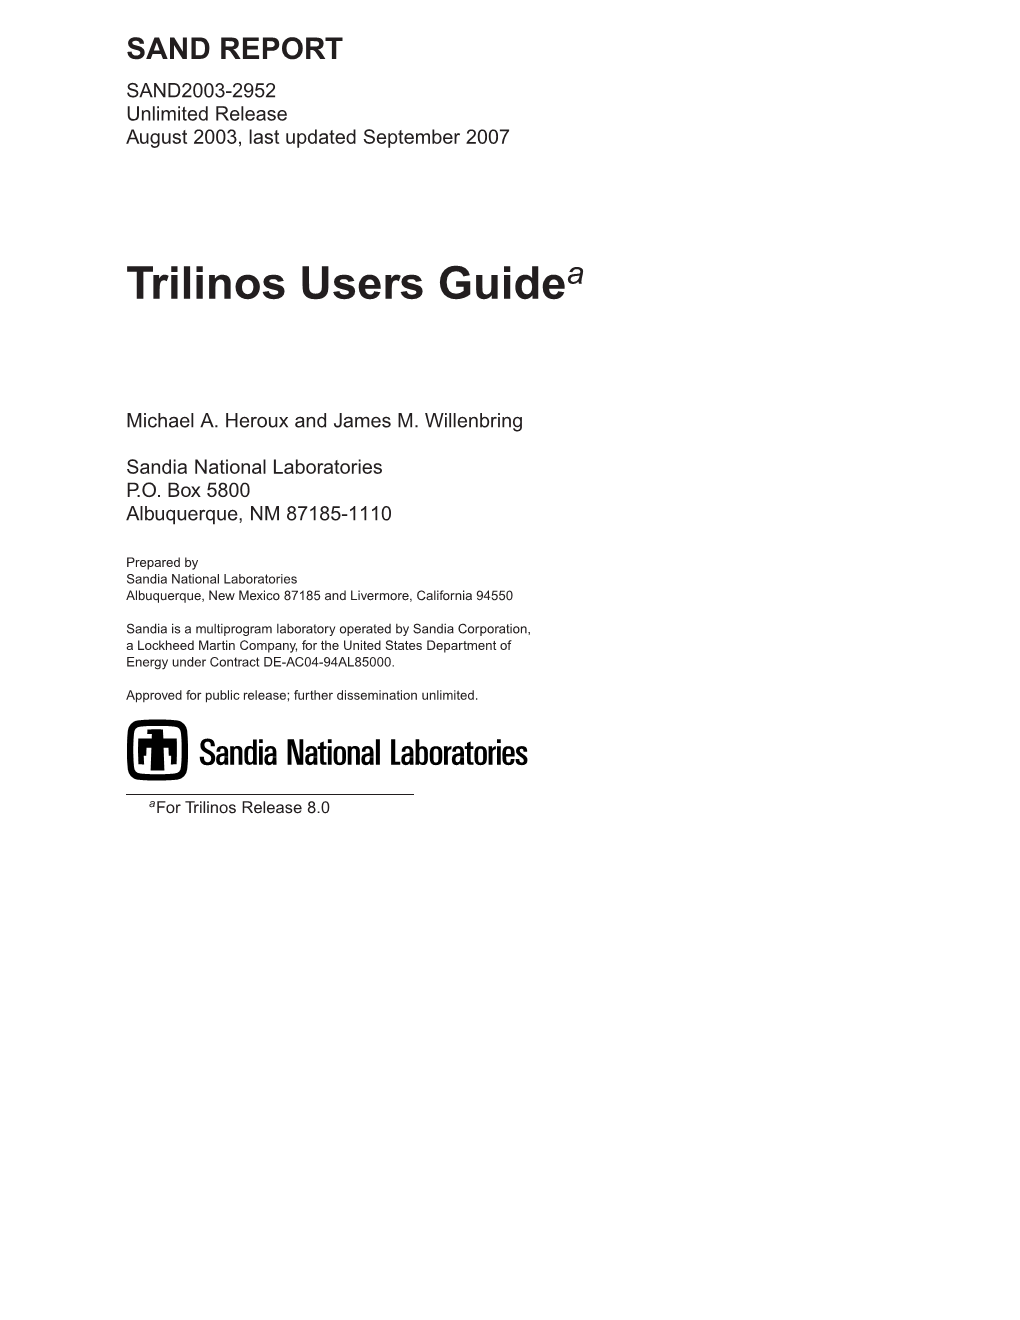 Trilinos Users Guidea